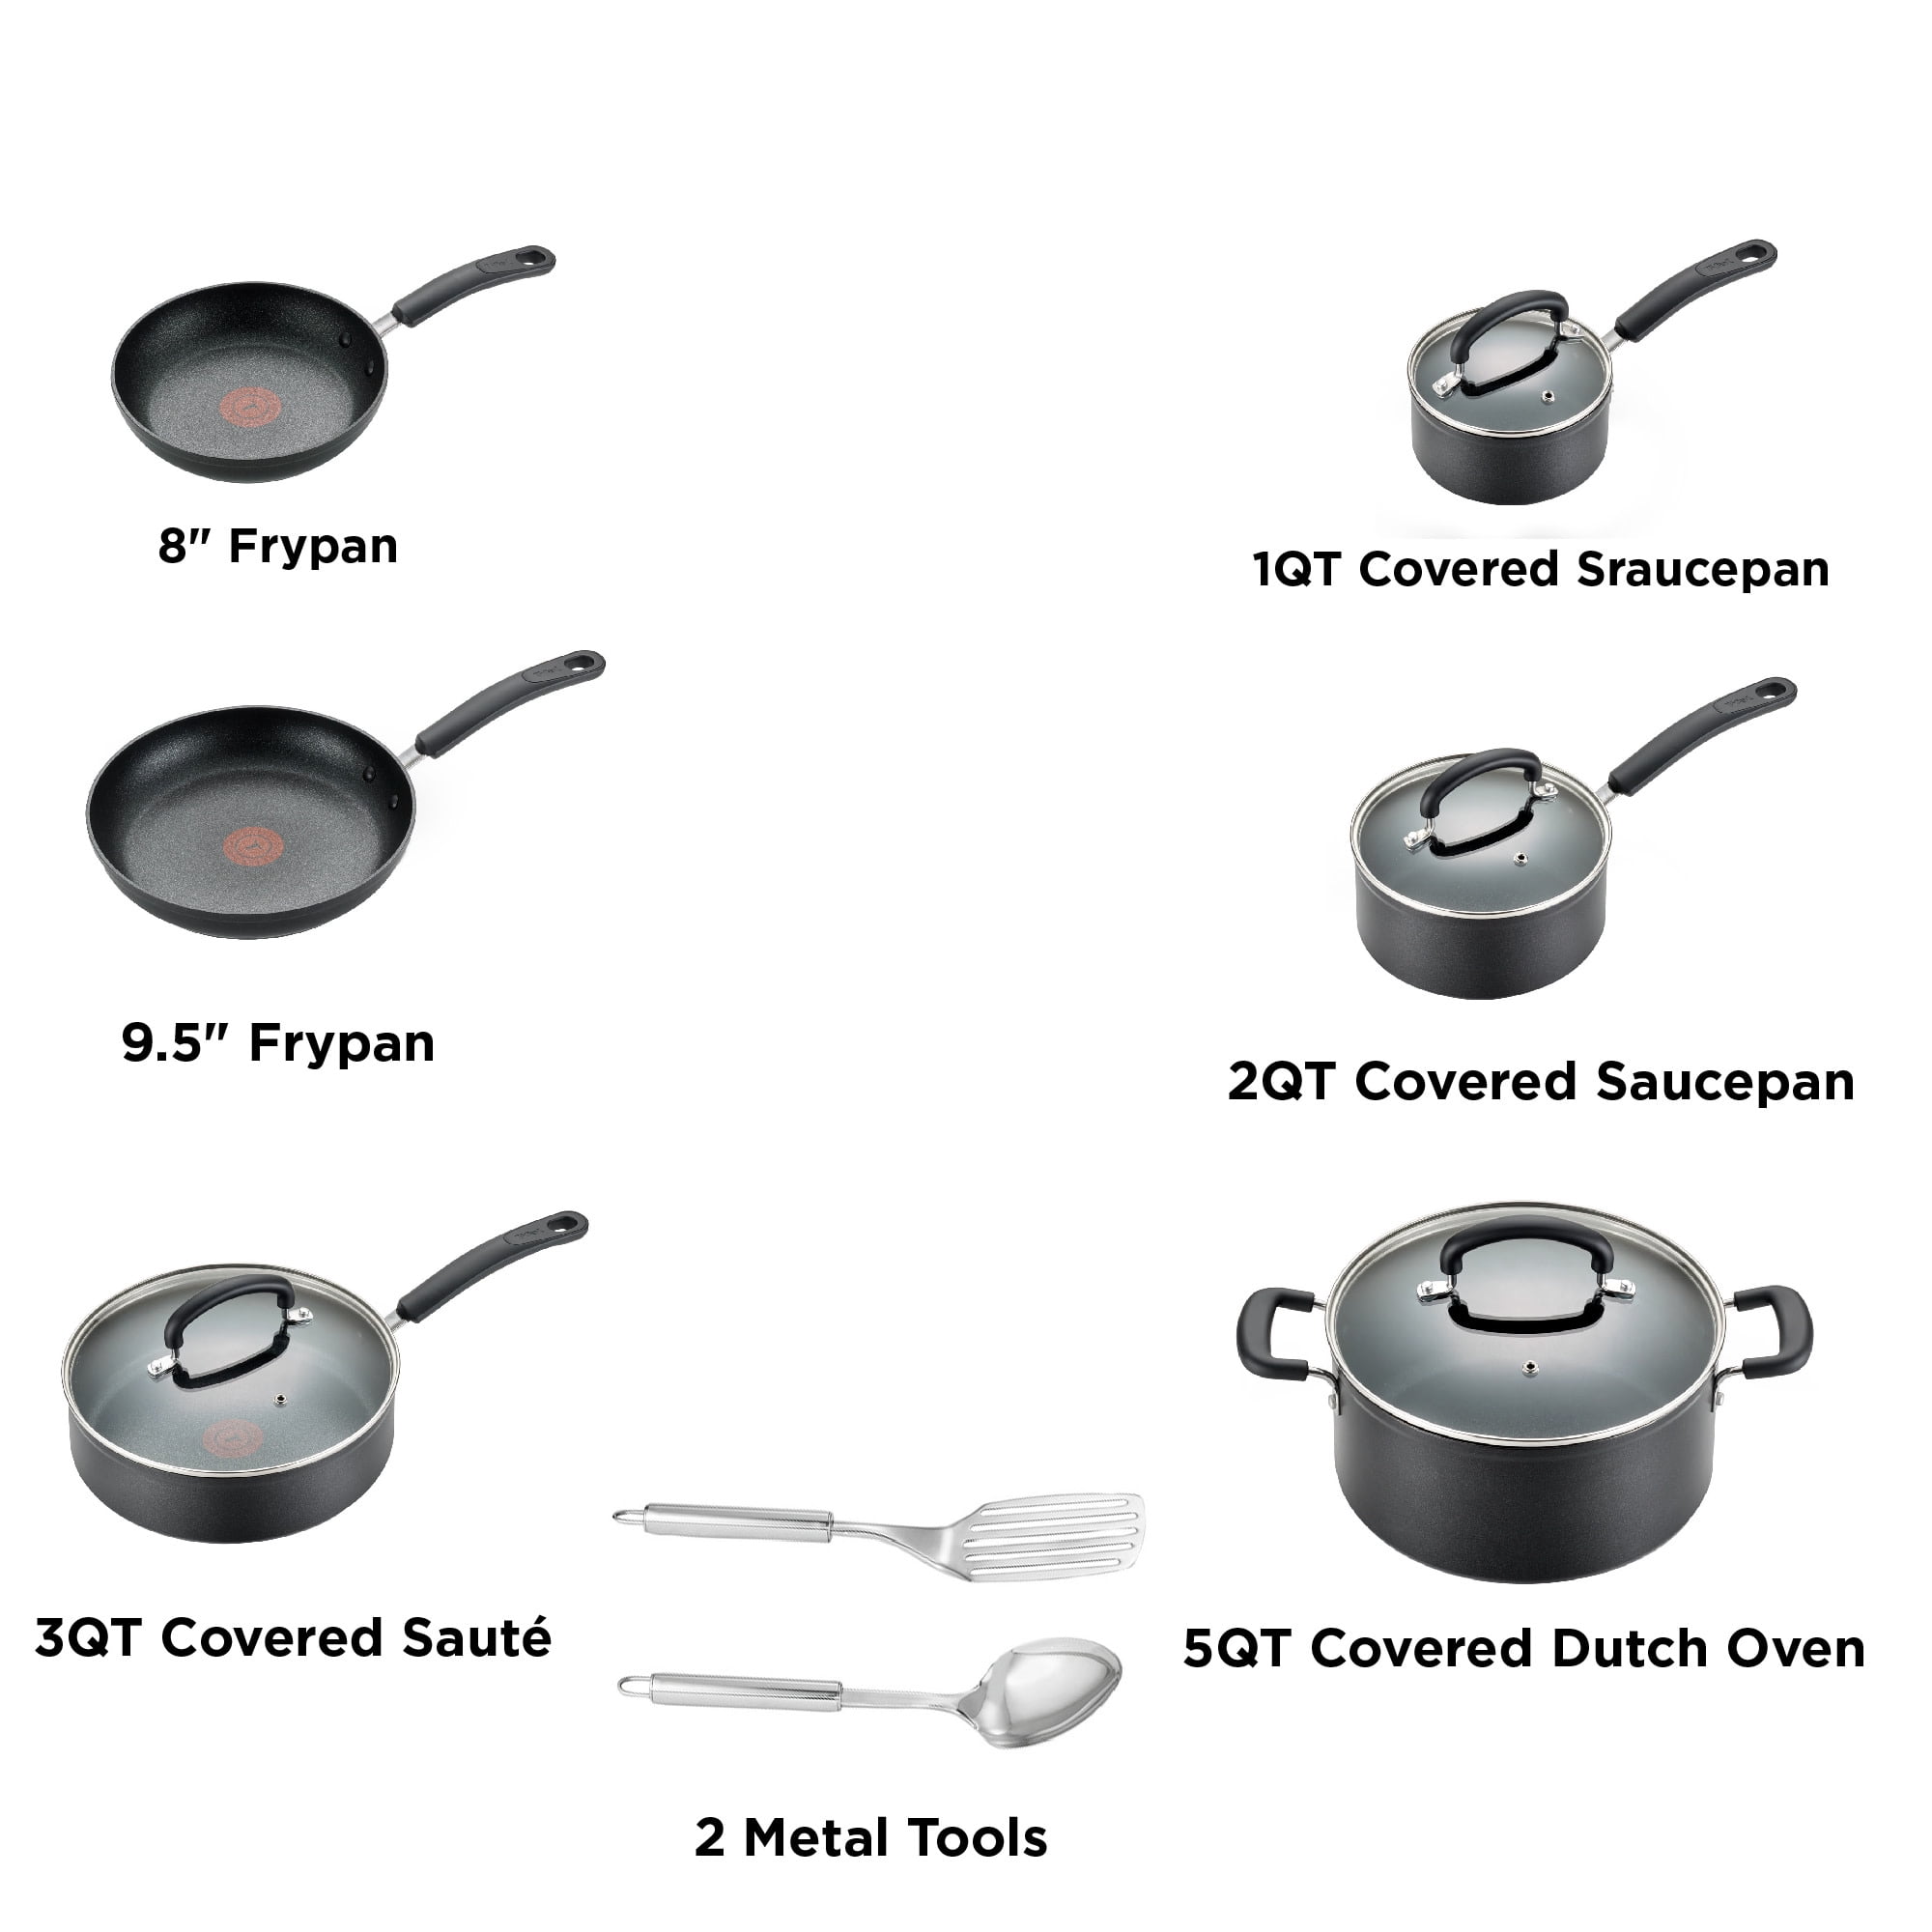 T-fal Advanced Nonstick Cookware Set 12 Piece Oven Safe 350F Pots and Pans,  Dishwasher Safe Black